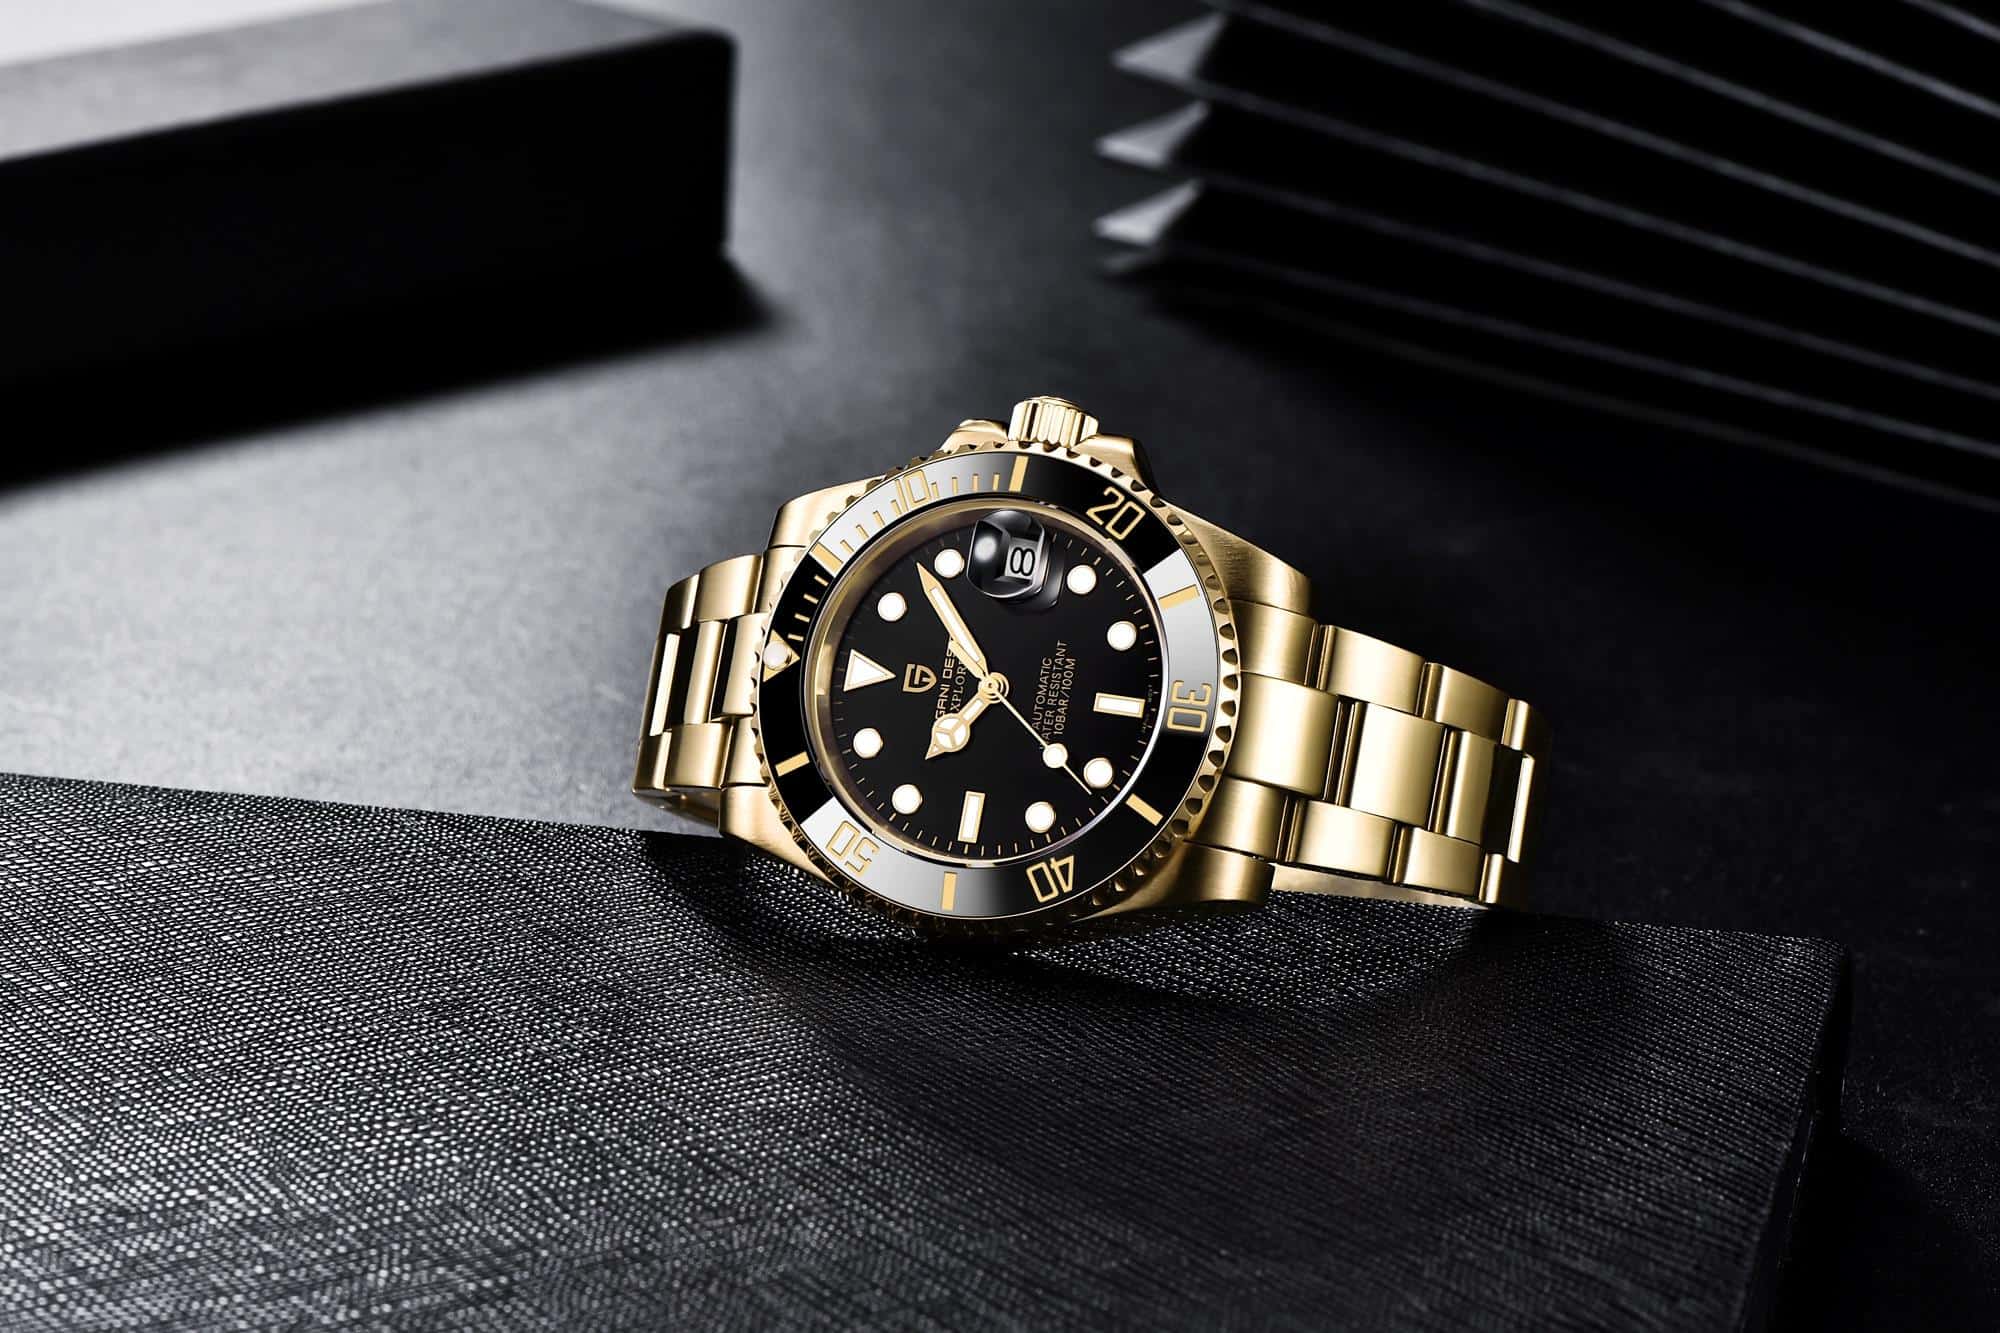 PAGANI DESIGN Top Brand New Stainless Steel Mechanical Watch Sapphire Glass Automatic Watch Luxury Waterproof Sports Men Watch